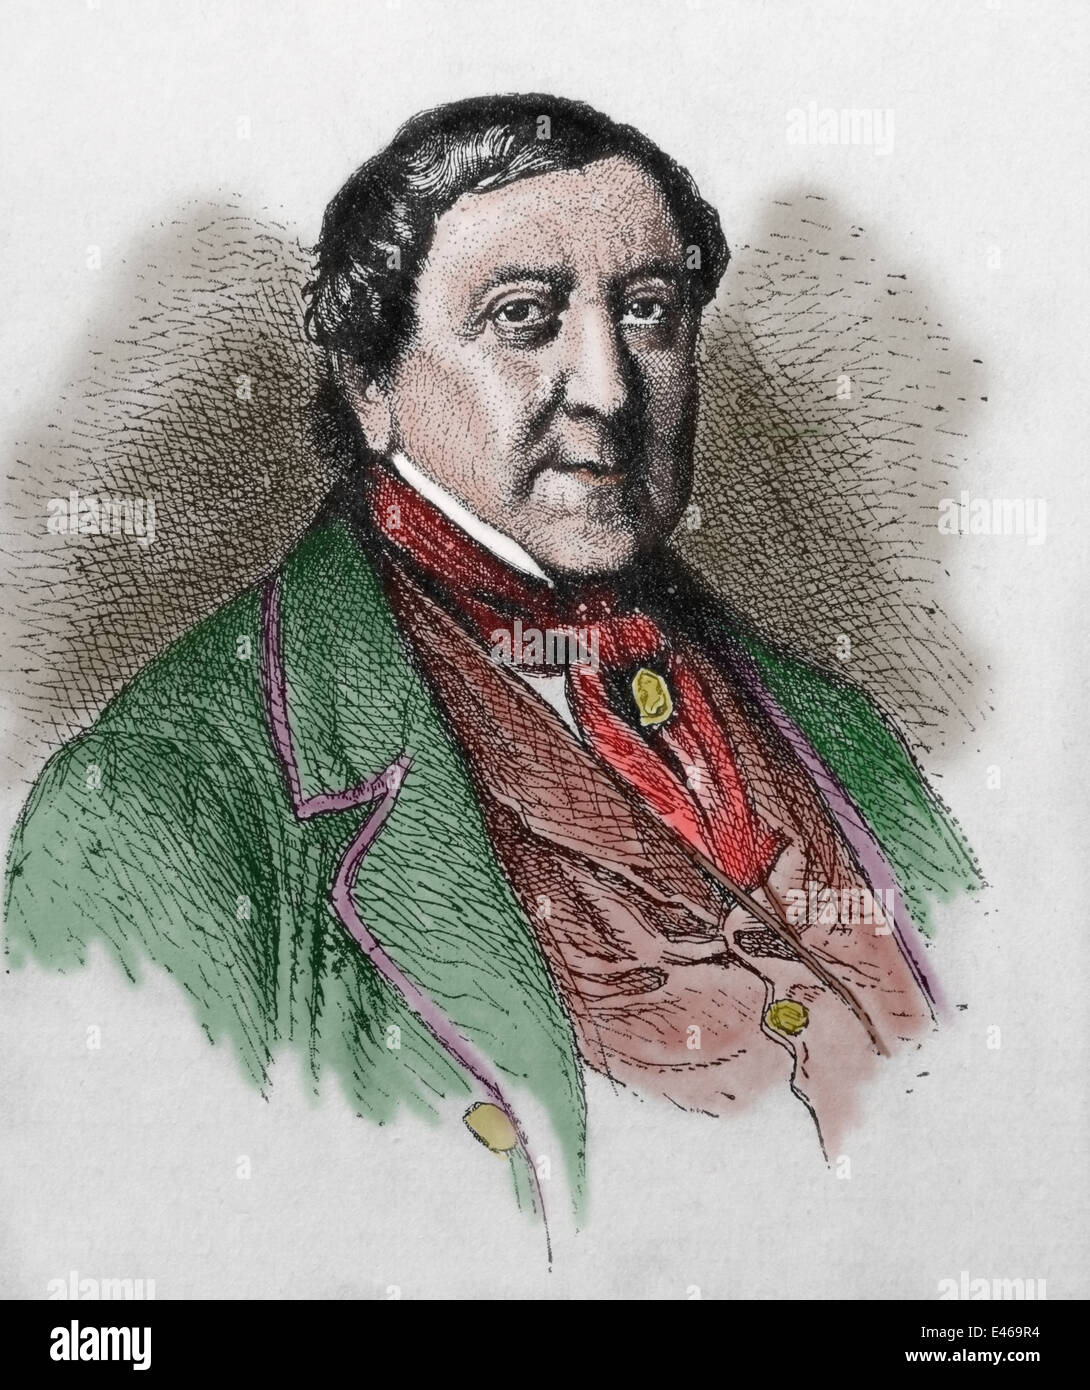 Gioachino Rossini (1792-1868). Compositor italiano. Grabado, 1917. Posteriormente coloración. Foto de stock